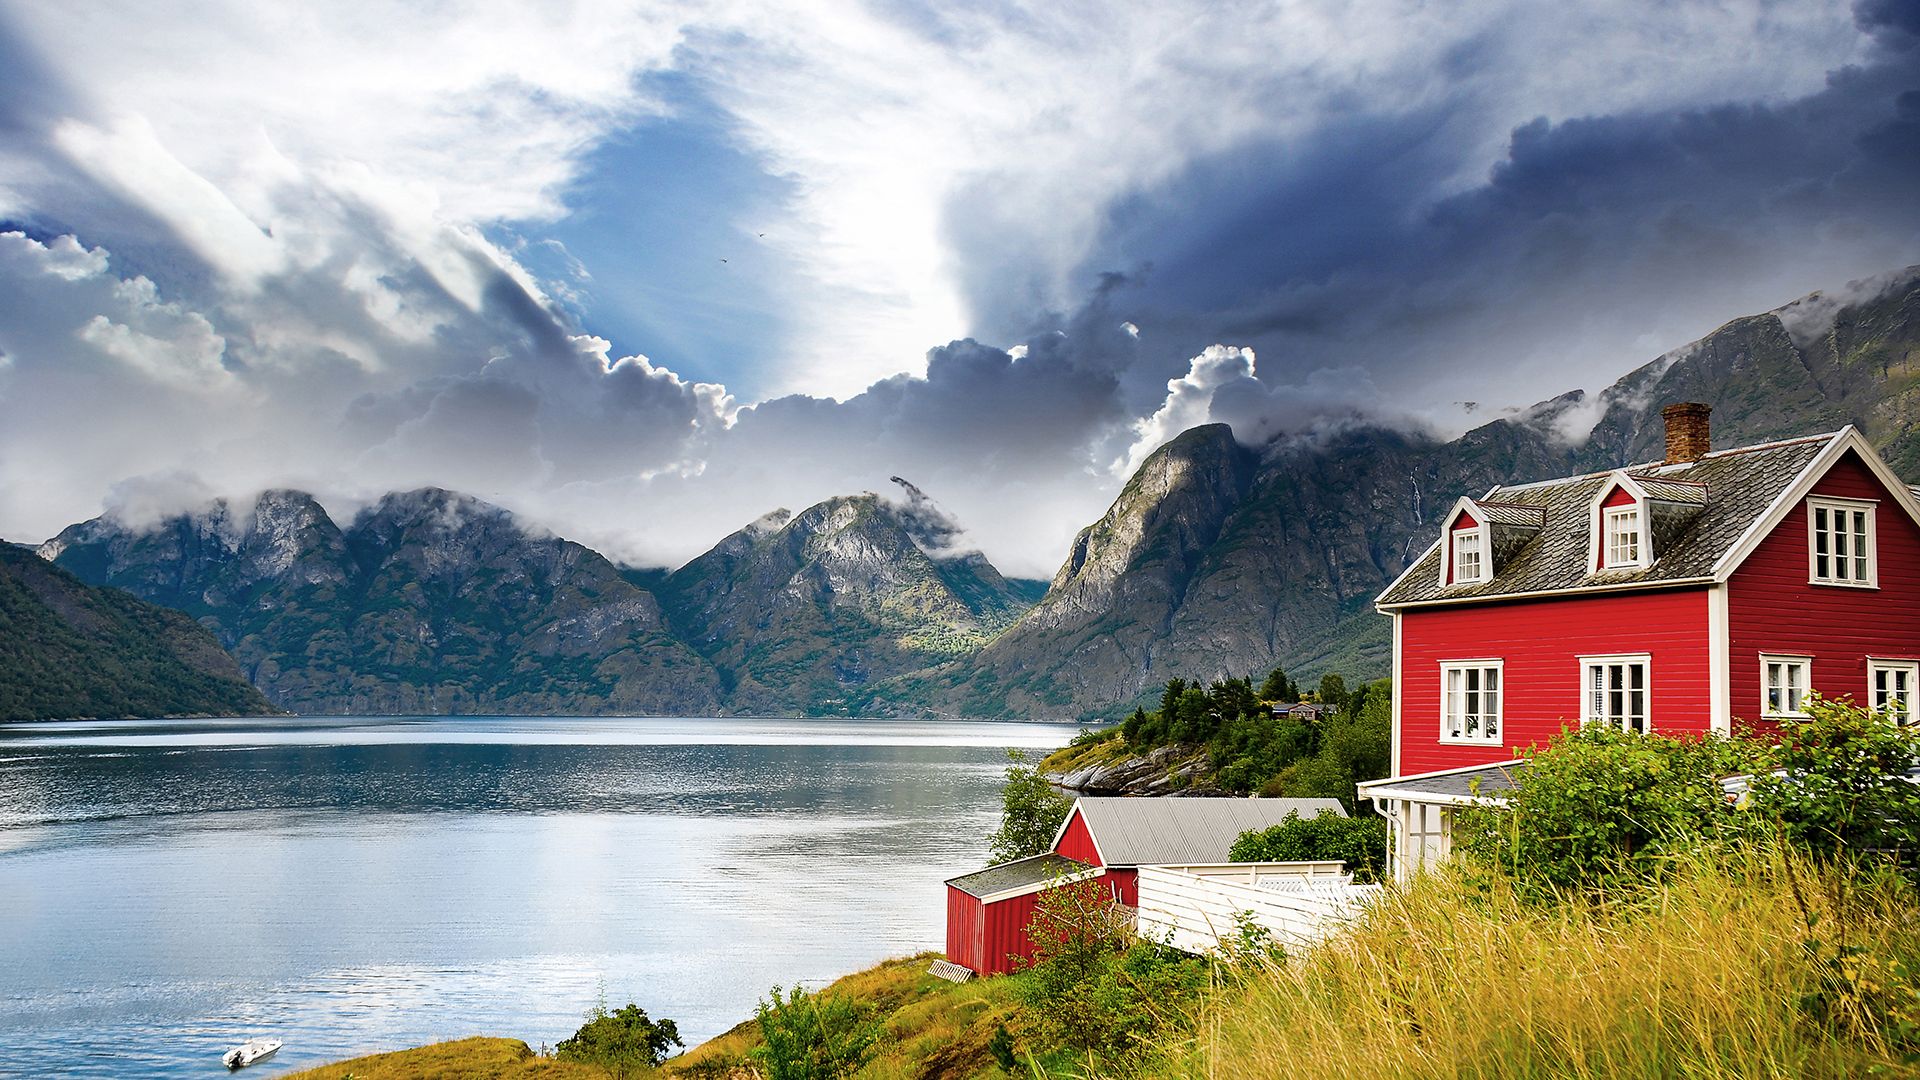 Fondos de la naturaleza noruega | Mejores fondos de pantalla